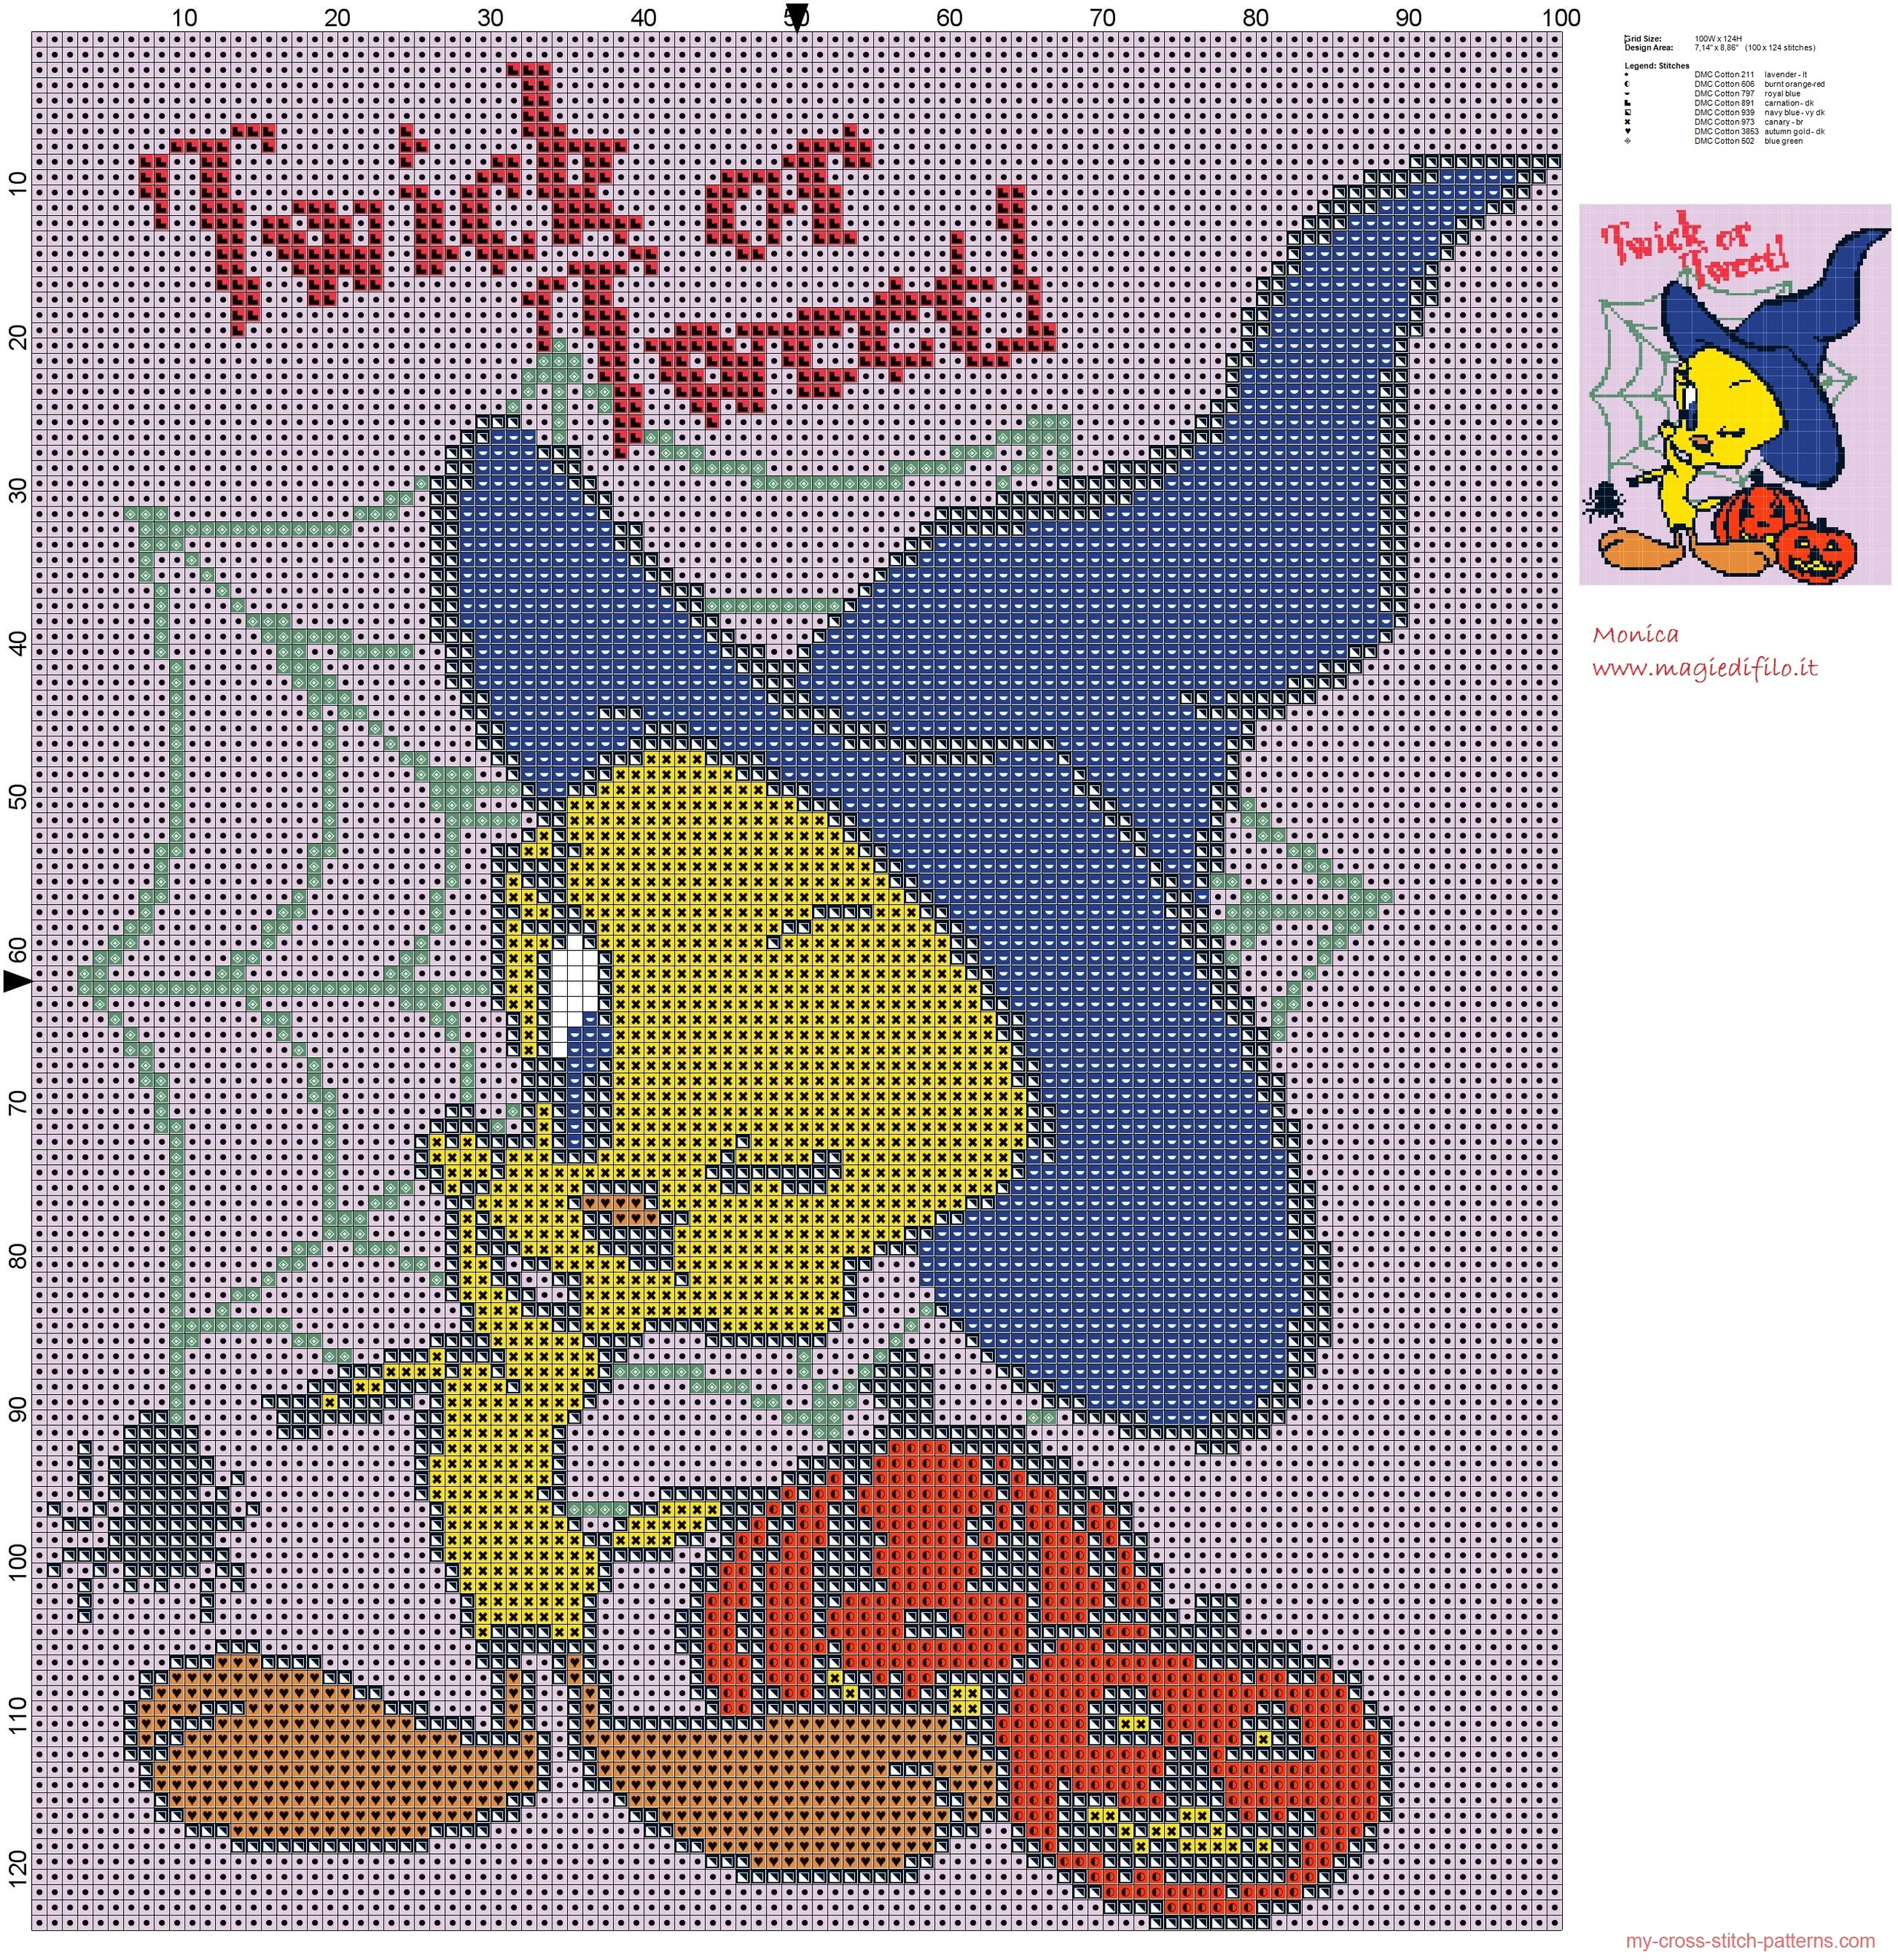 tweety_halloween_cross_stitch_pattern